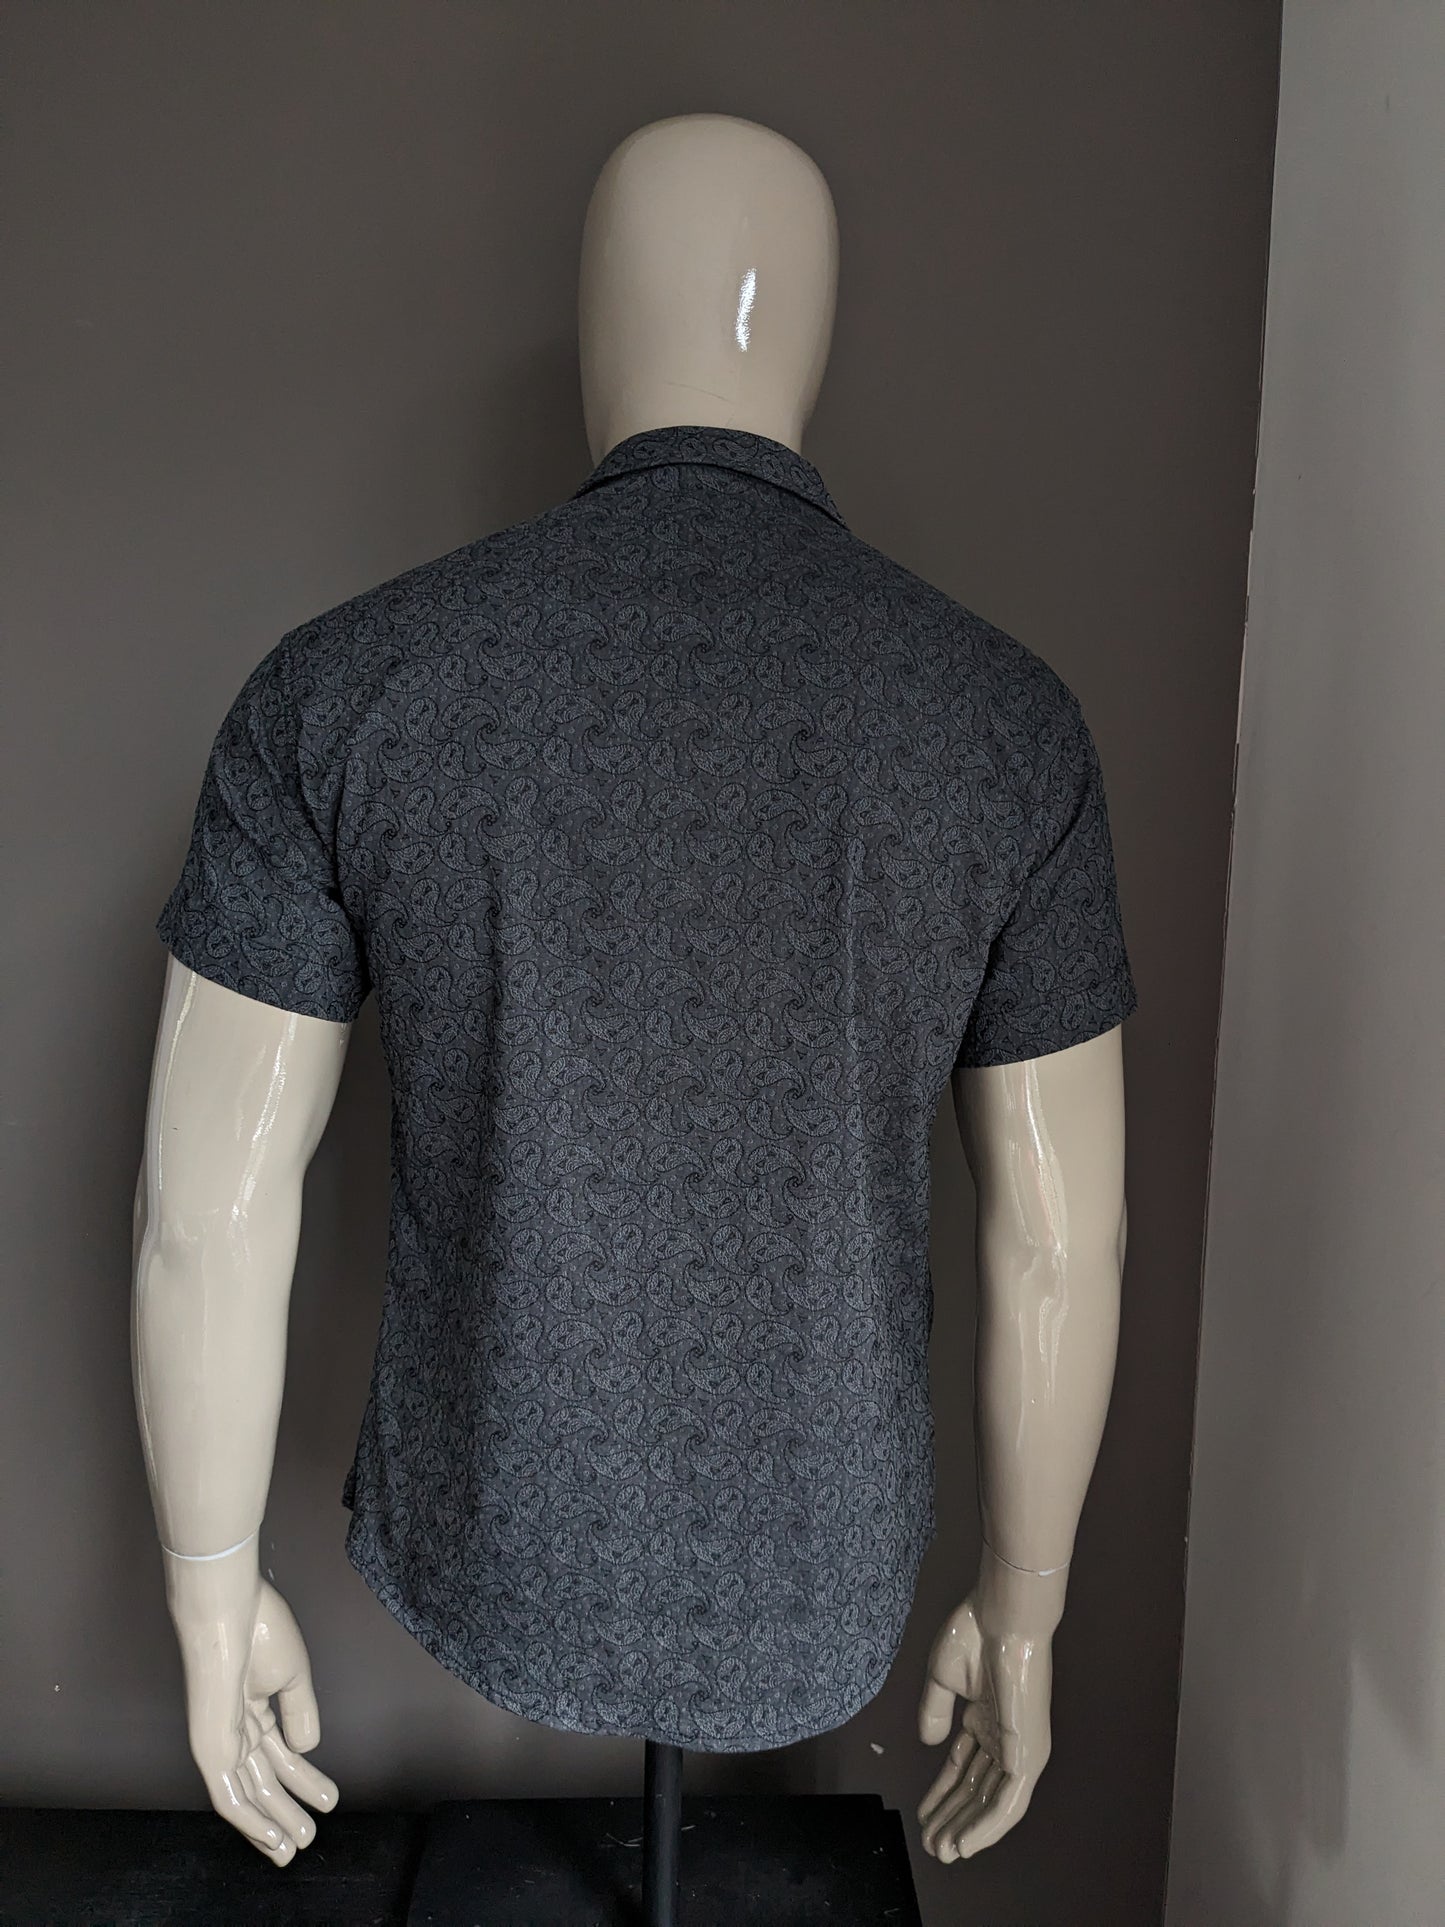 Mudenni Shirt short sleeves. Gray black paisley print. Size L. Stretch.